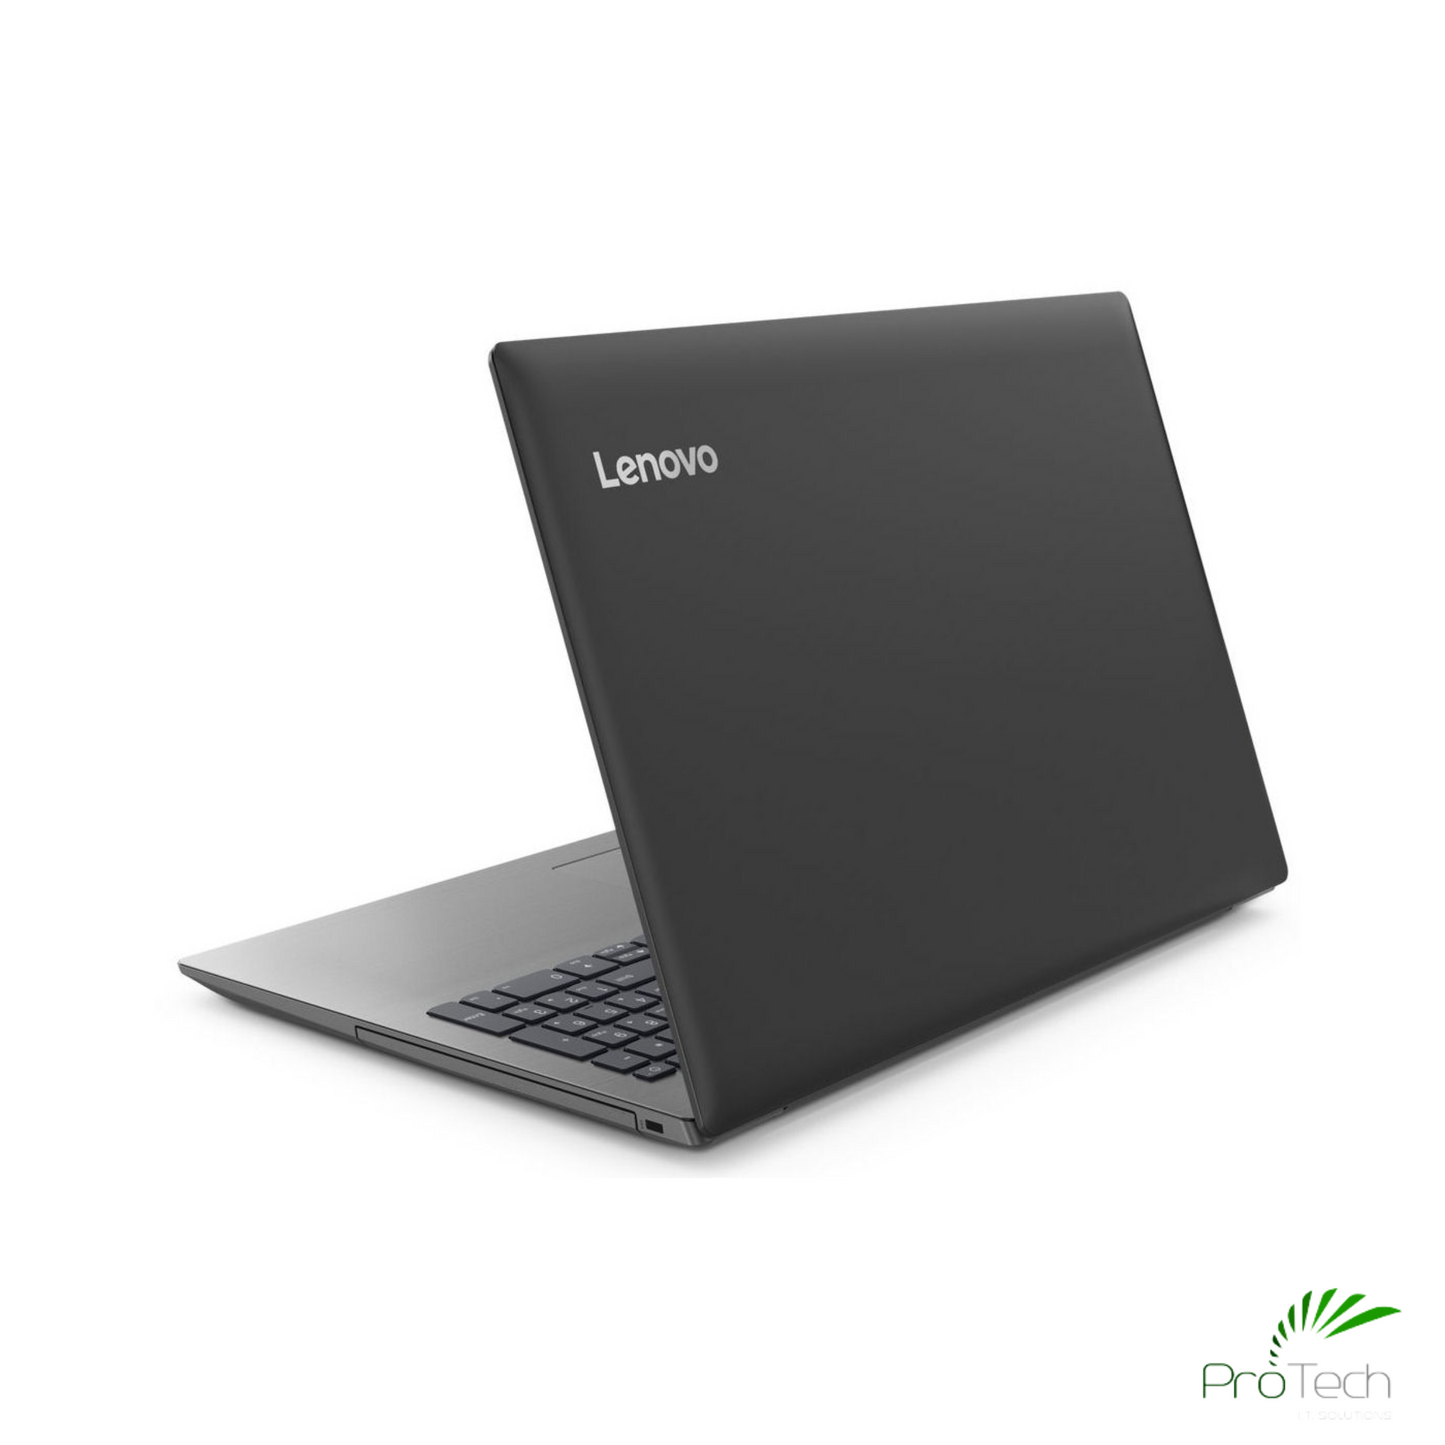 Lenovo IdeaPad 330-15IKB | Core i5 | 8GB RAM | 1TB HHD ProTech I.T. Solutions